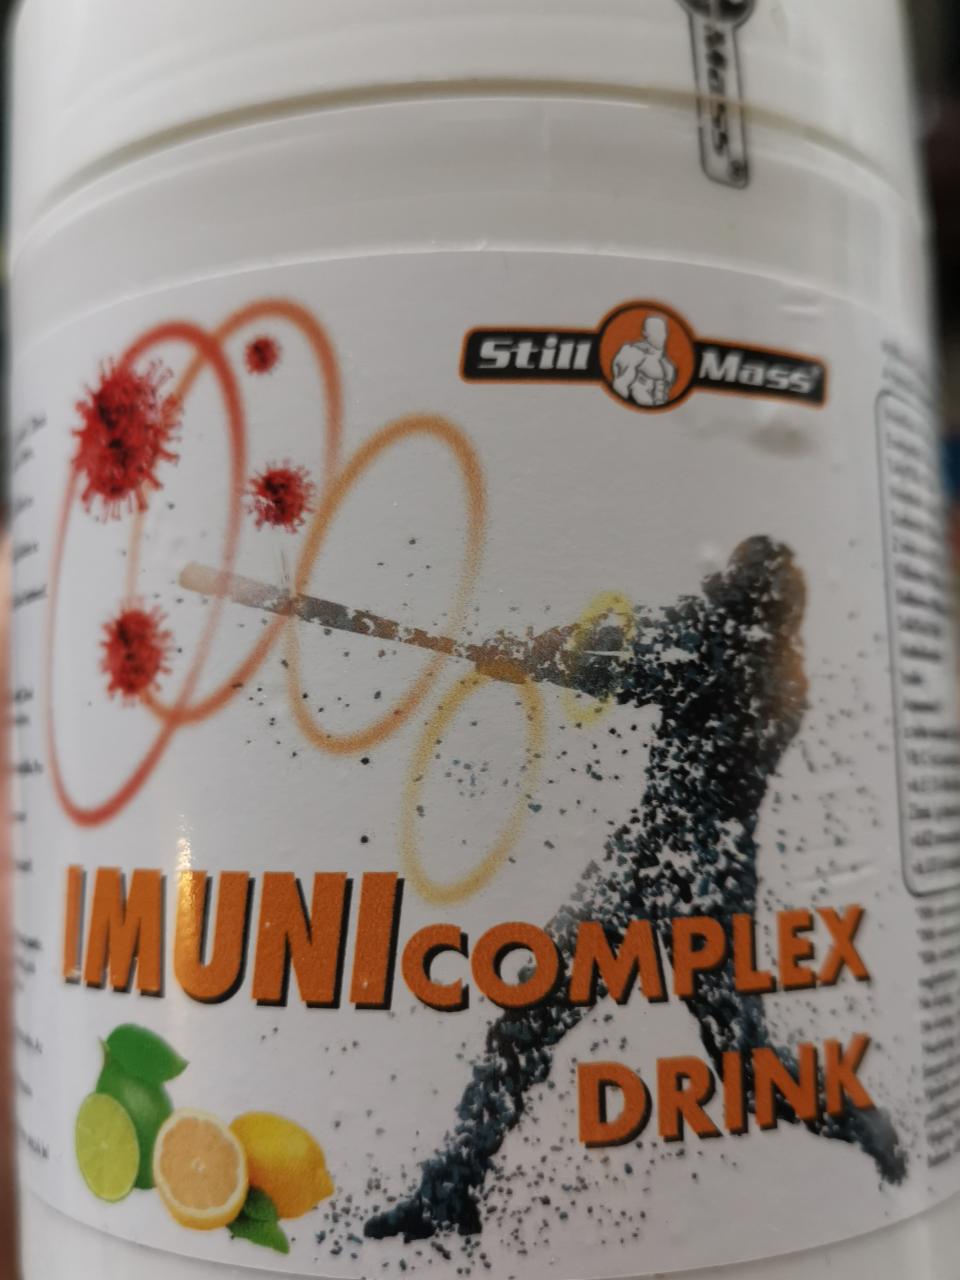 Fotografie - imunicomplex drink still mass